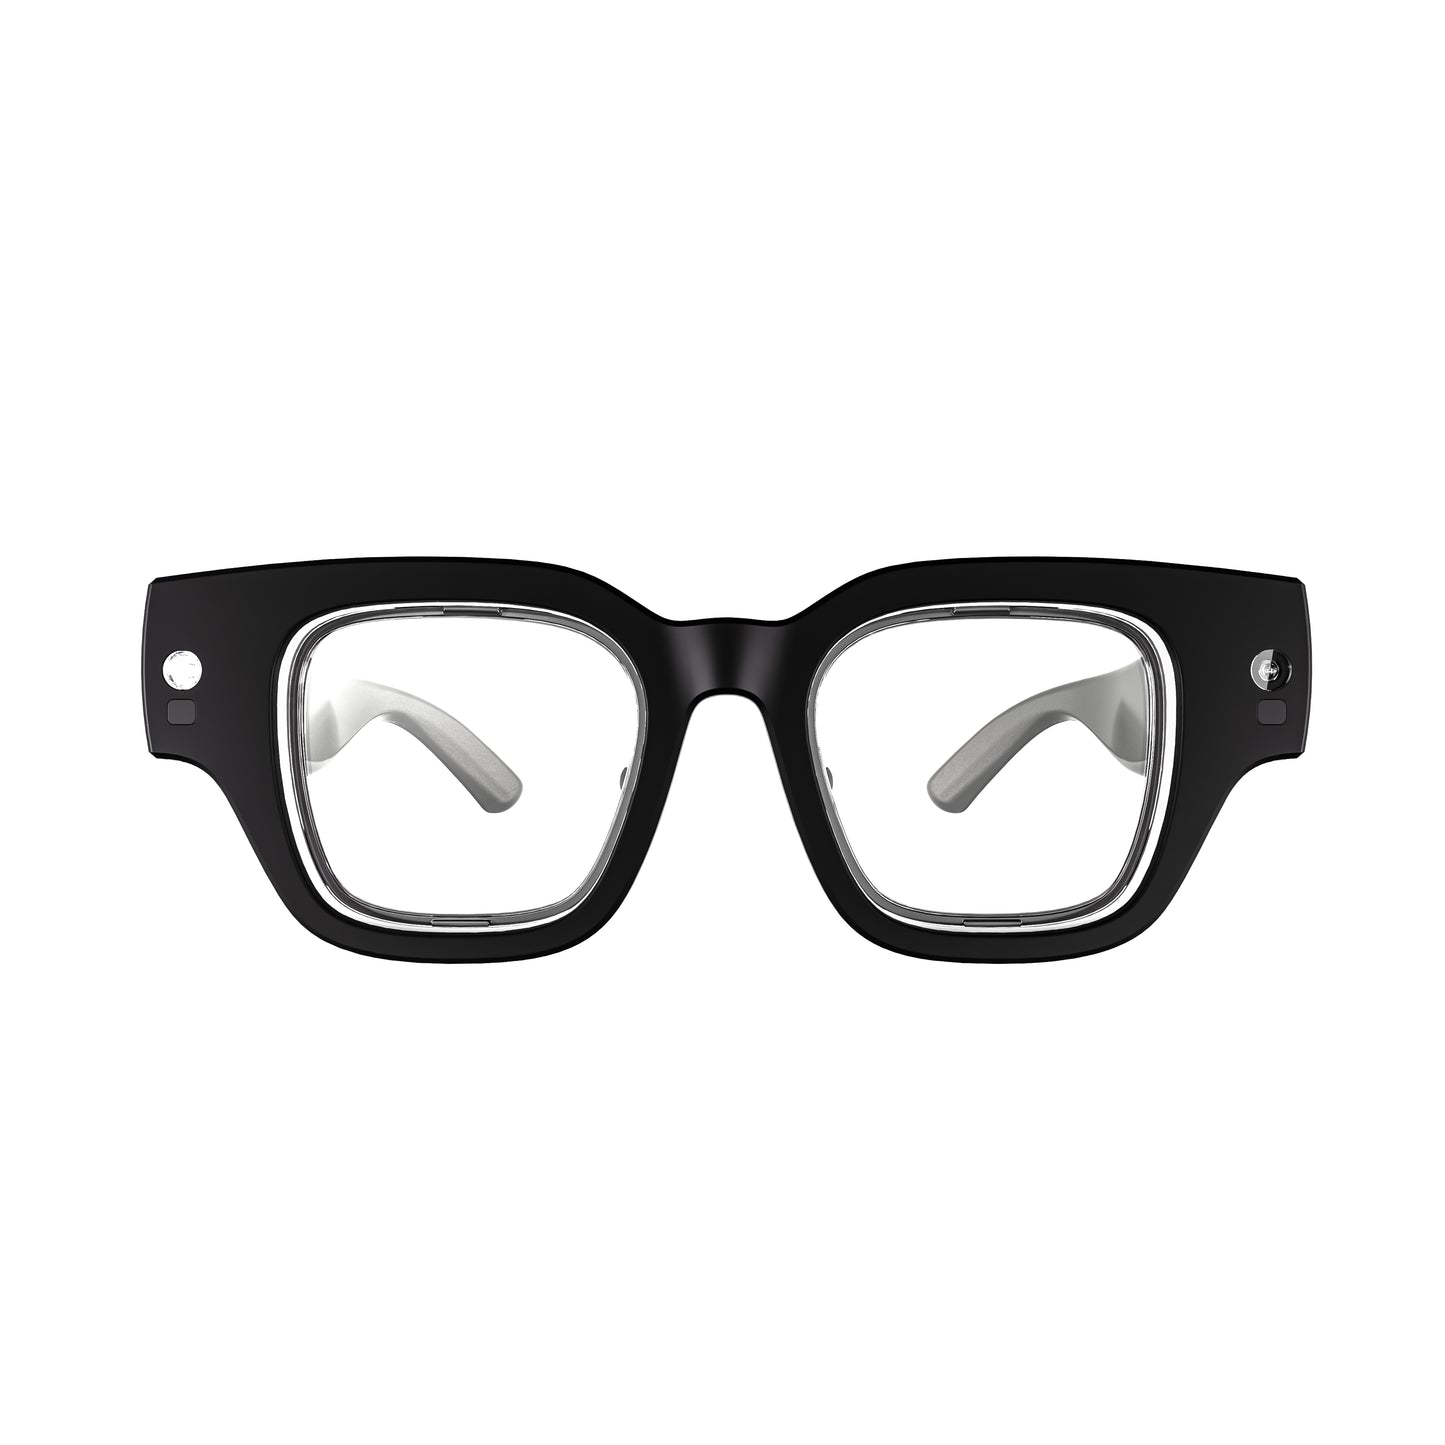 INMO Air2 Smart AR Glasses